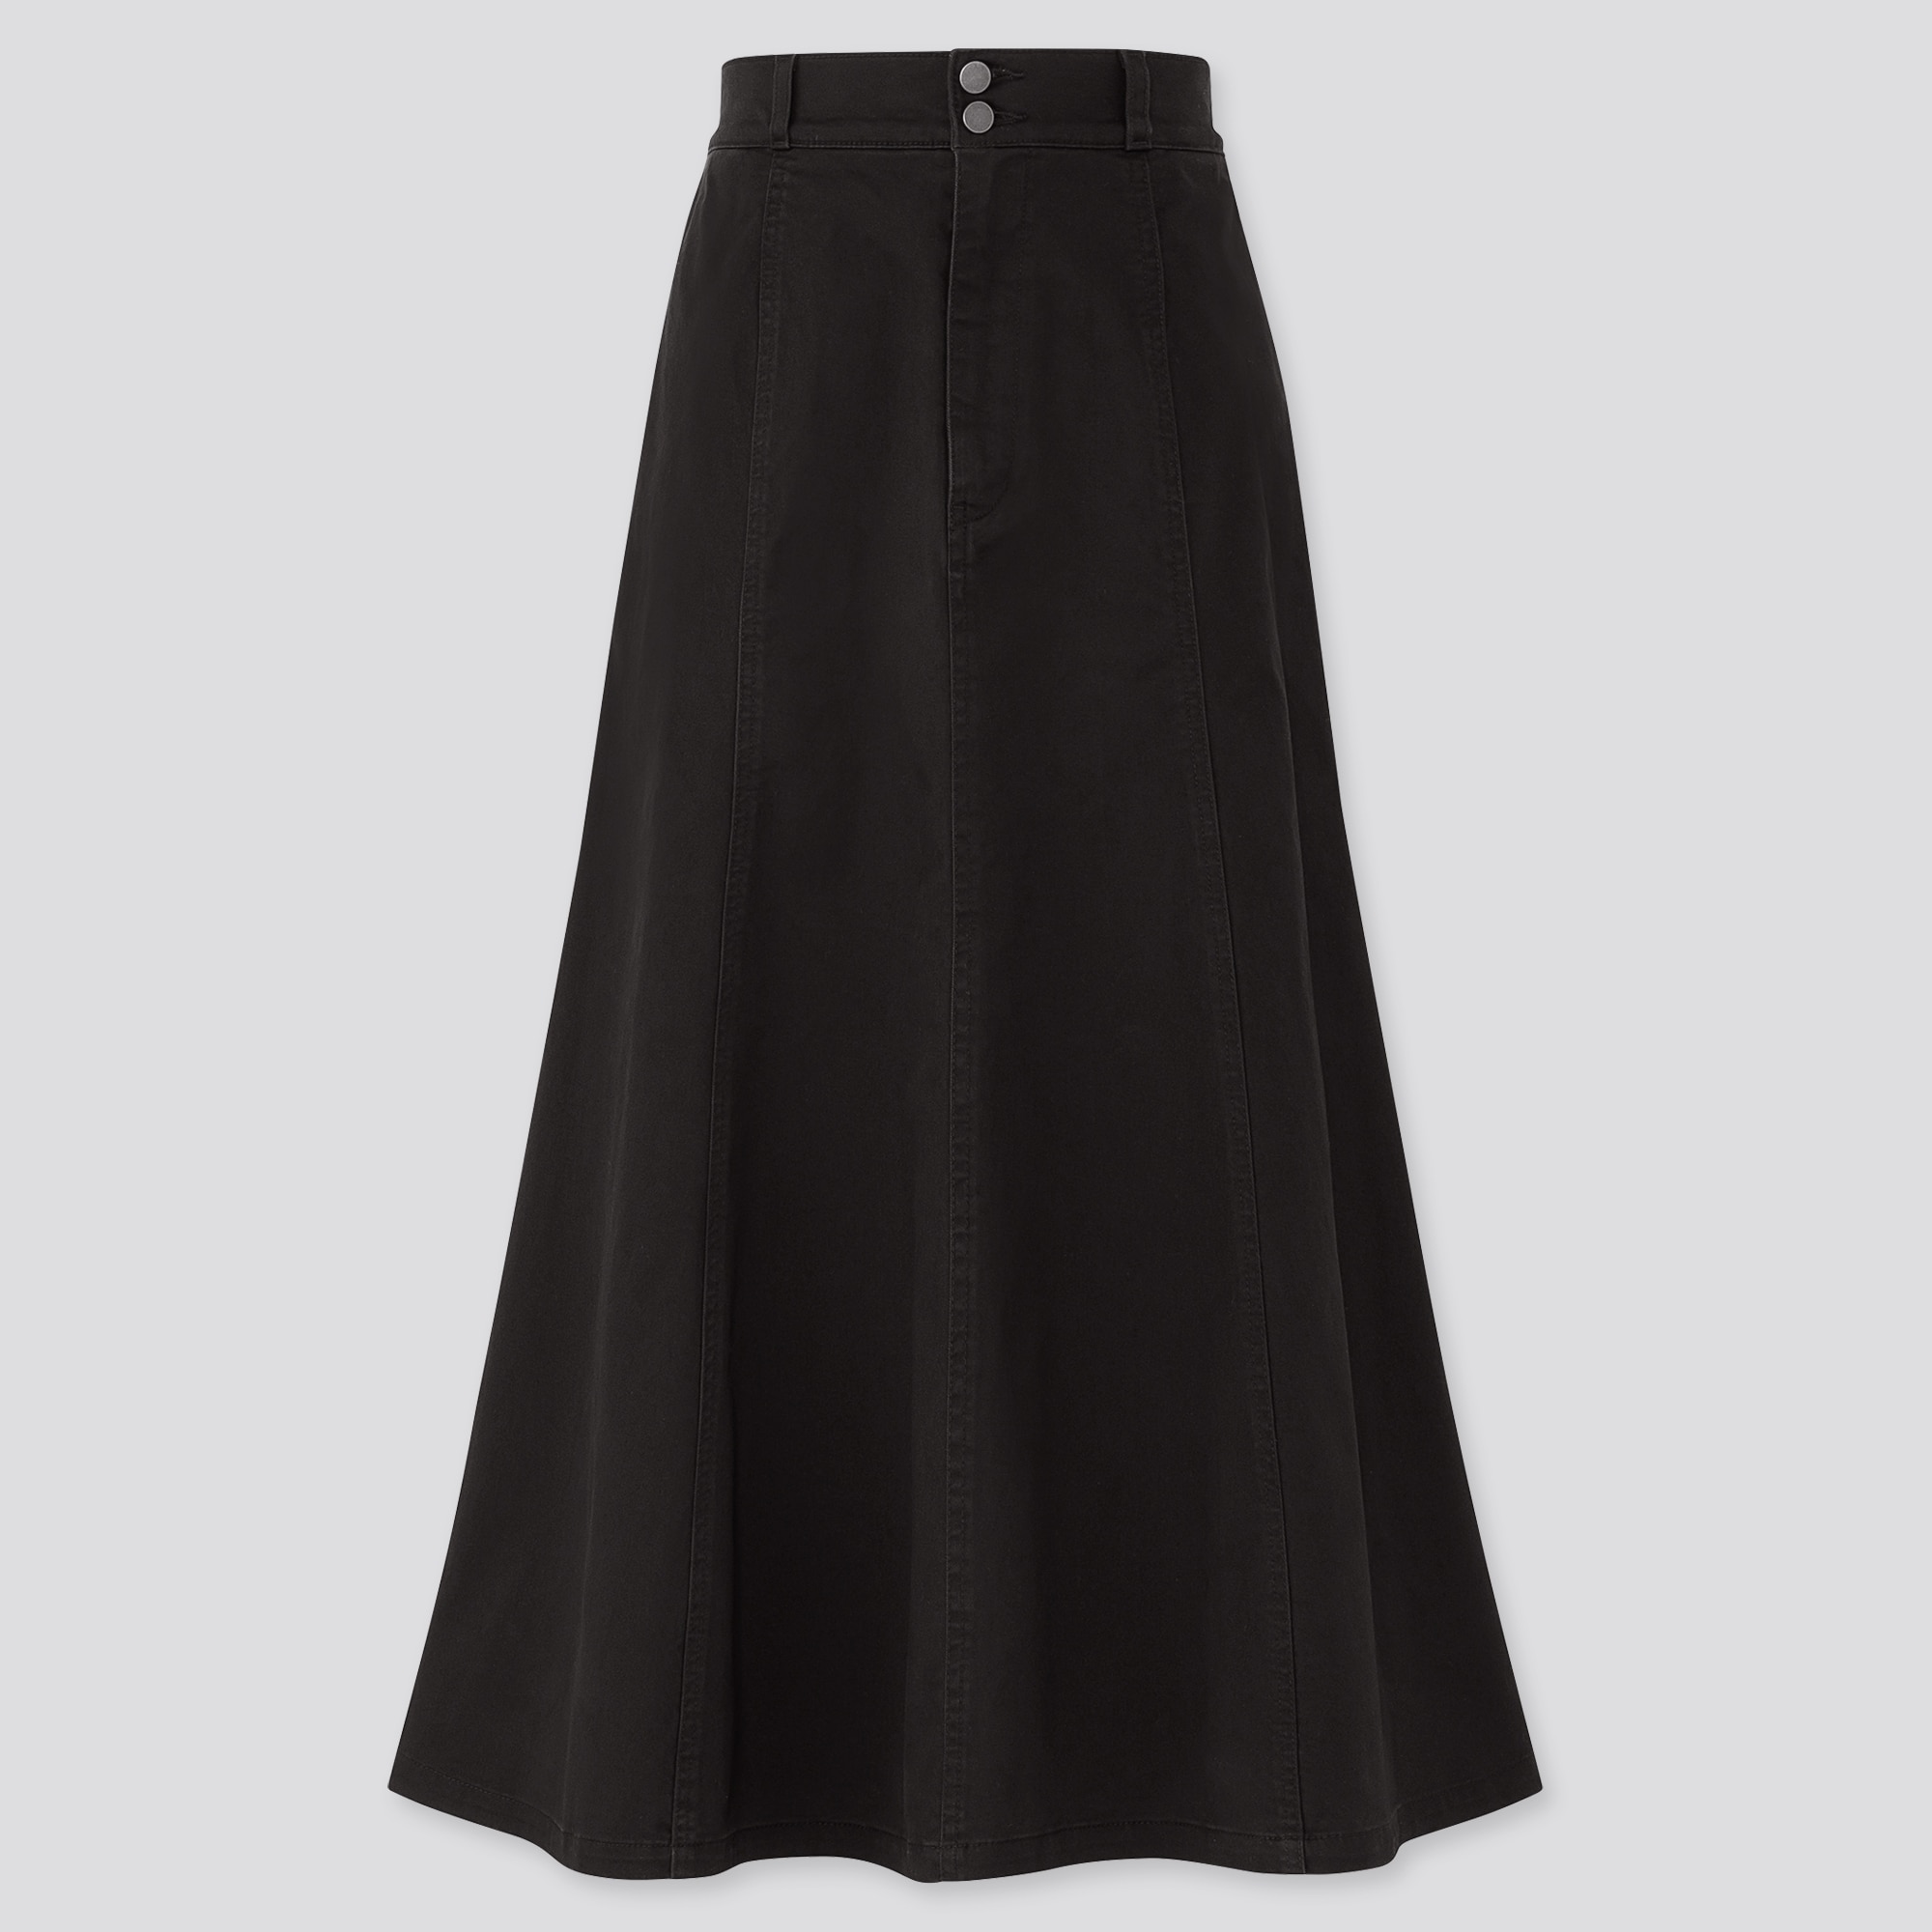 high waisted black skirt